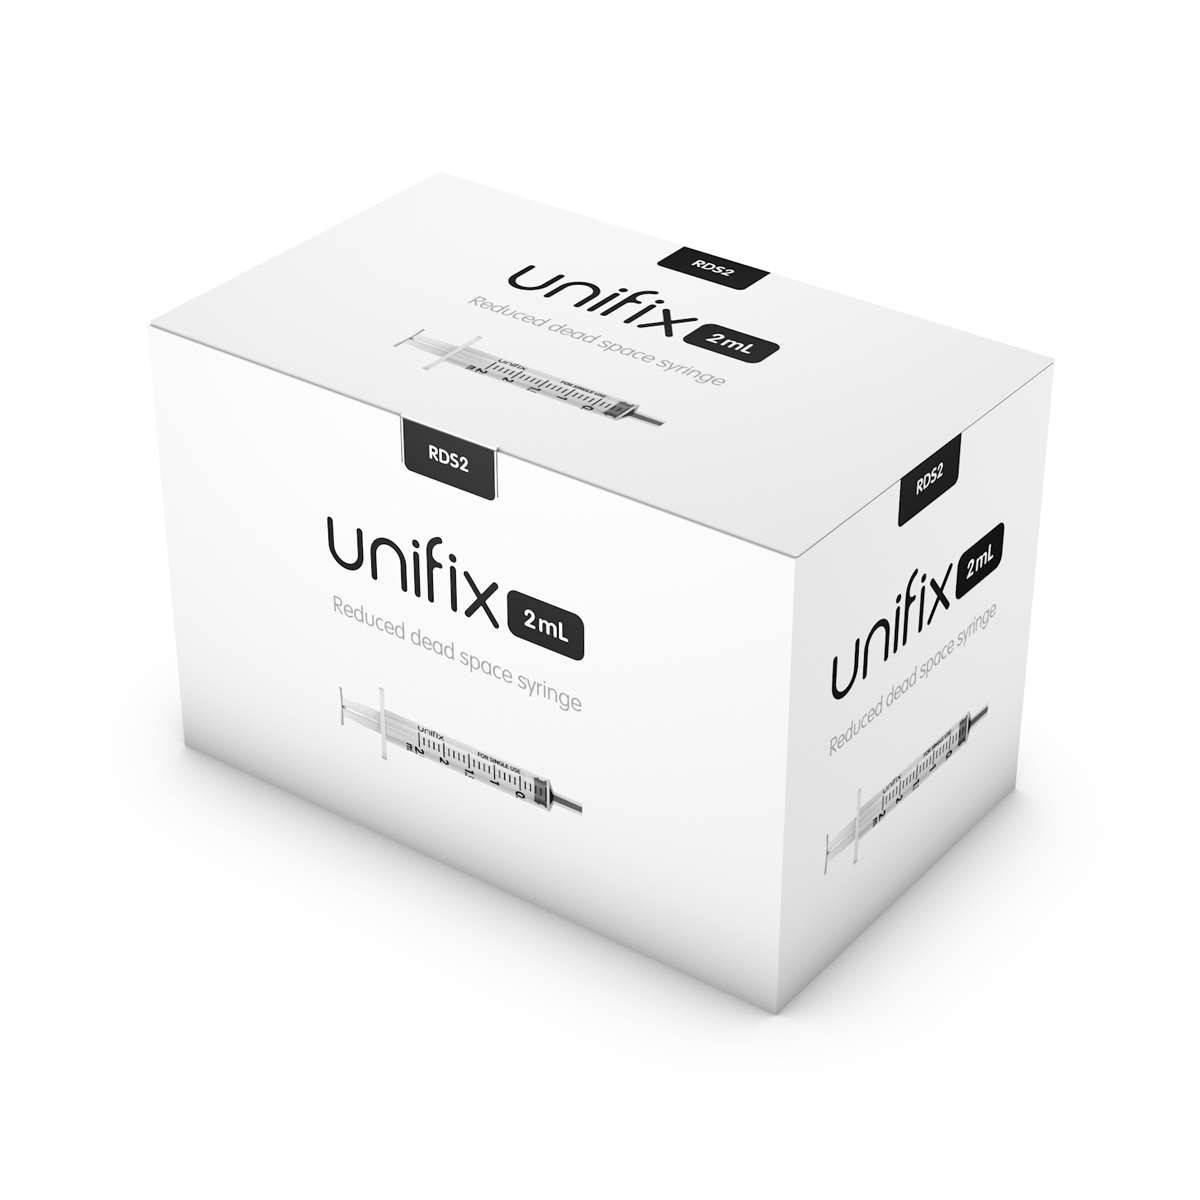 2ml Unifix Reduced Dead Space Syringe - UKMEDI